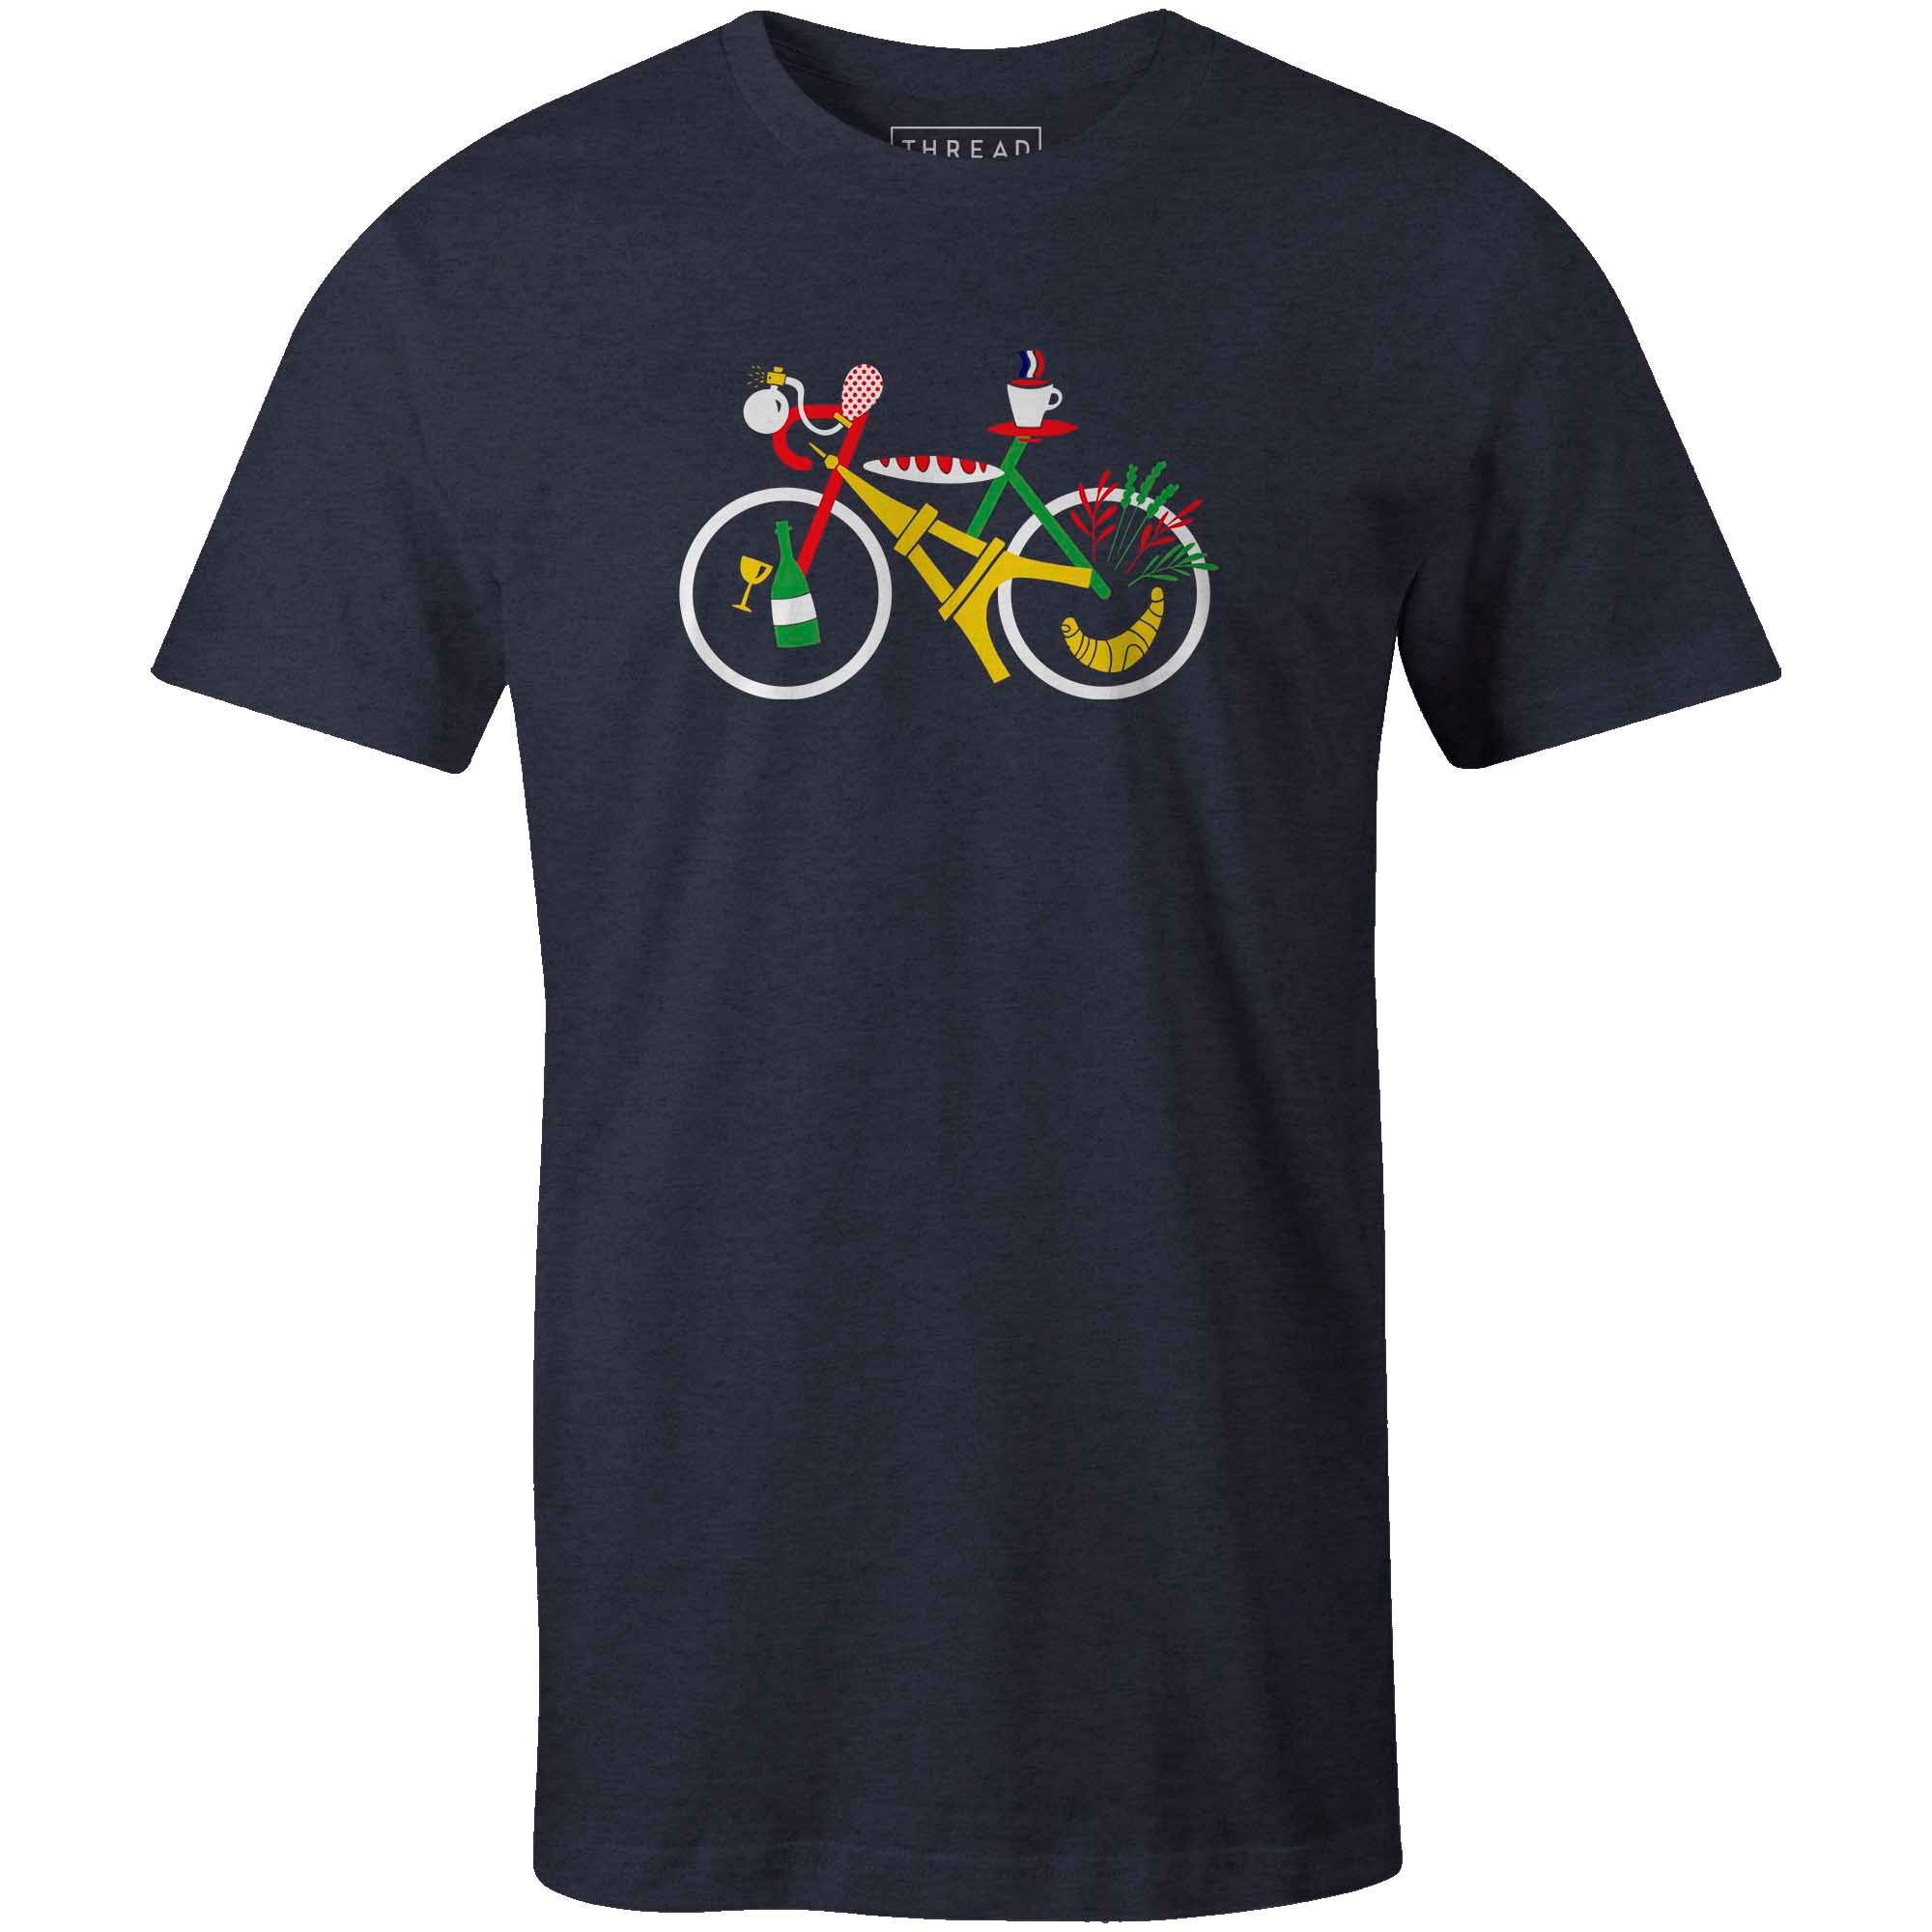 Men's T-shirt - French Bike